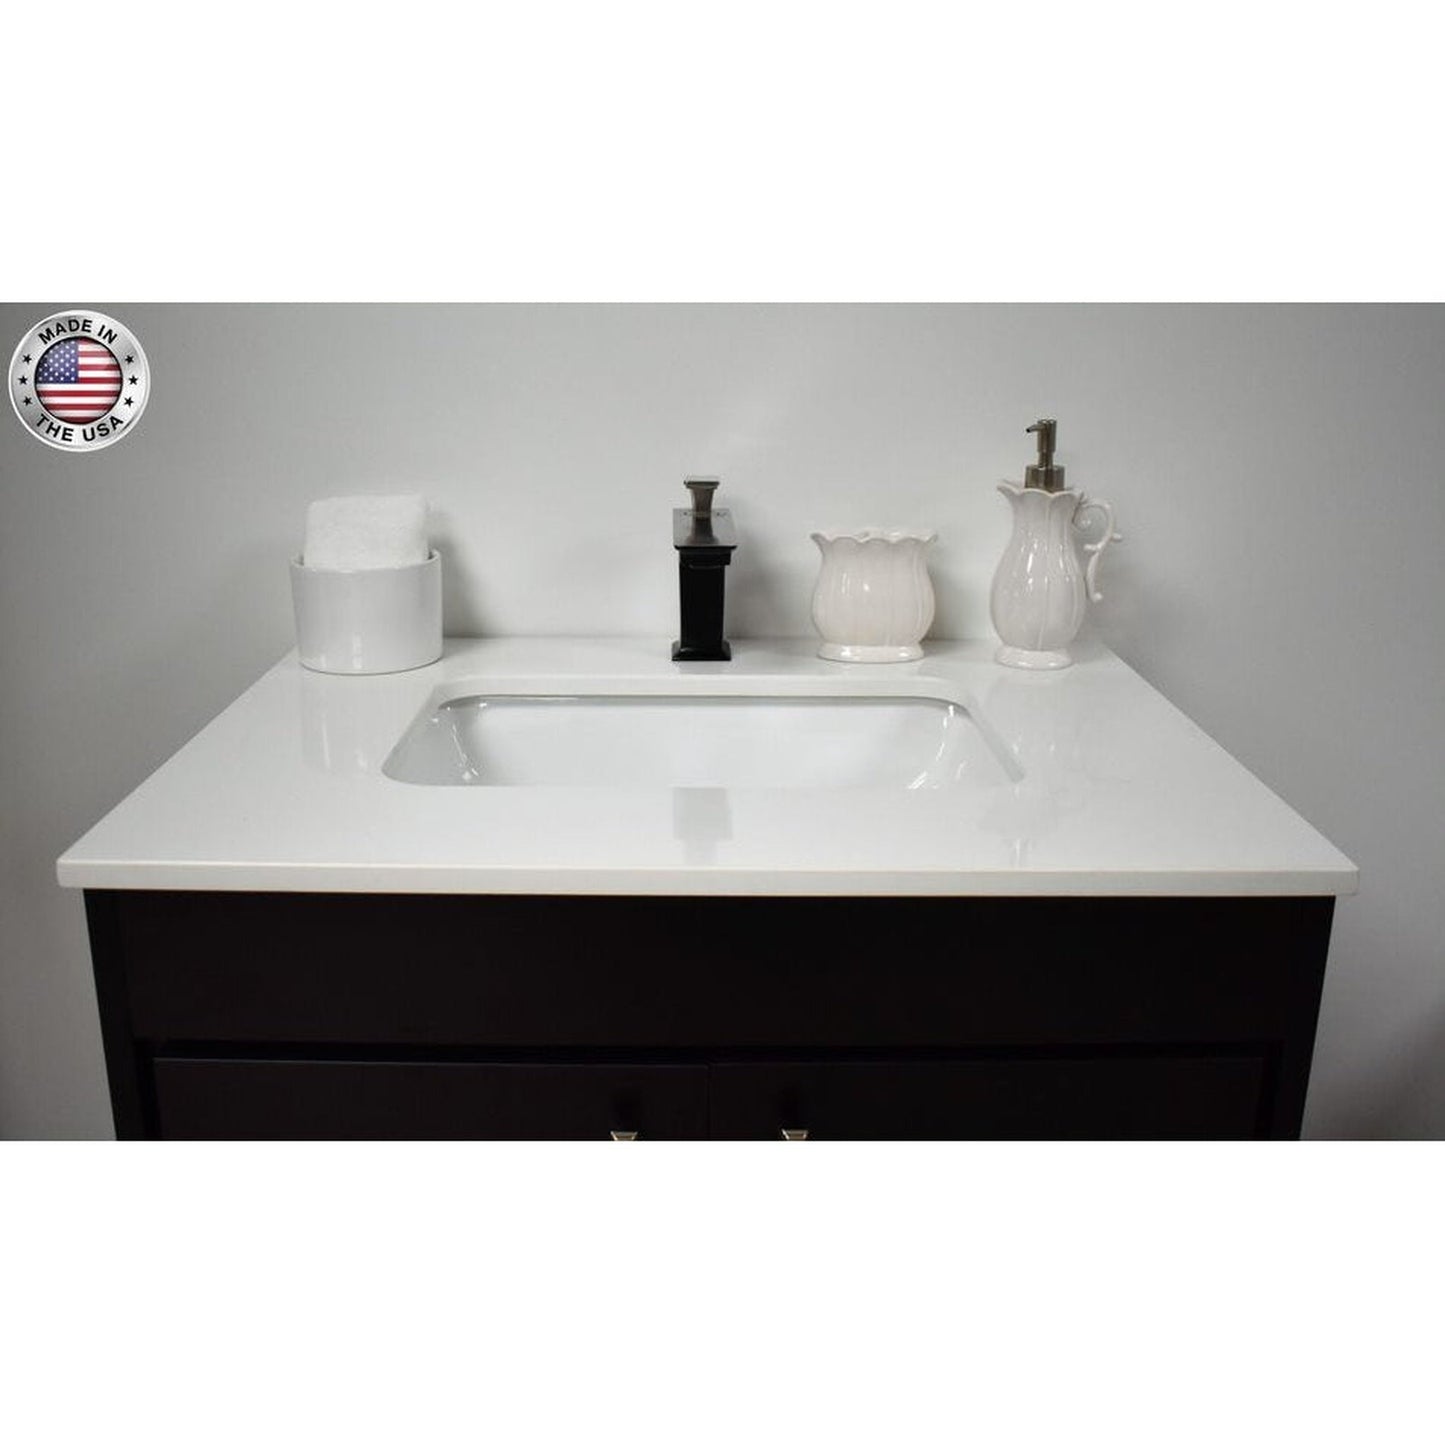 Volpa USA Capri 36" x 22" Black Freestanding Modern Bathroom Vanity With Preinstalled Undermount Sink And White Microstone Top With Brushed Nickel Edge Handles